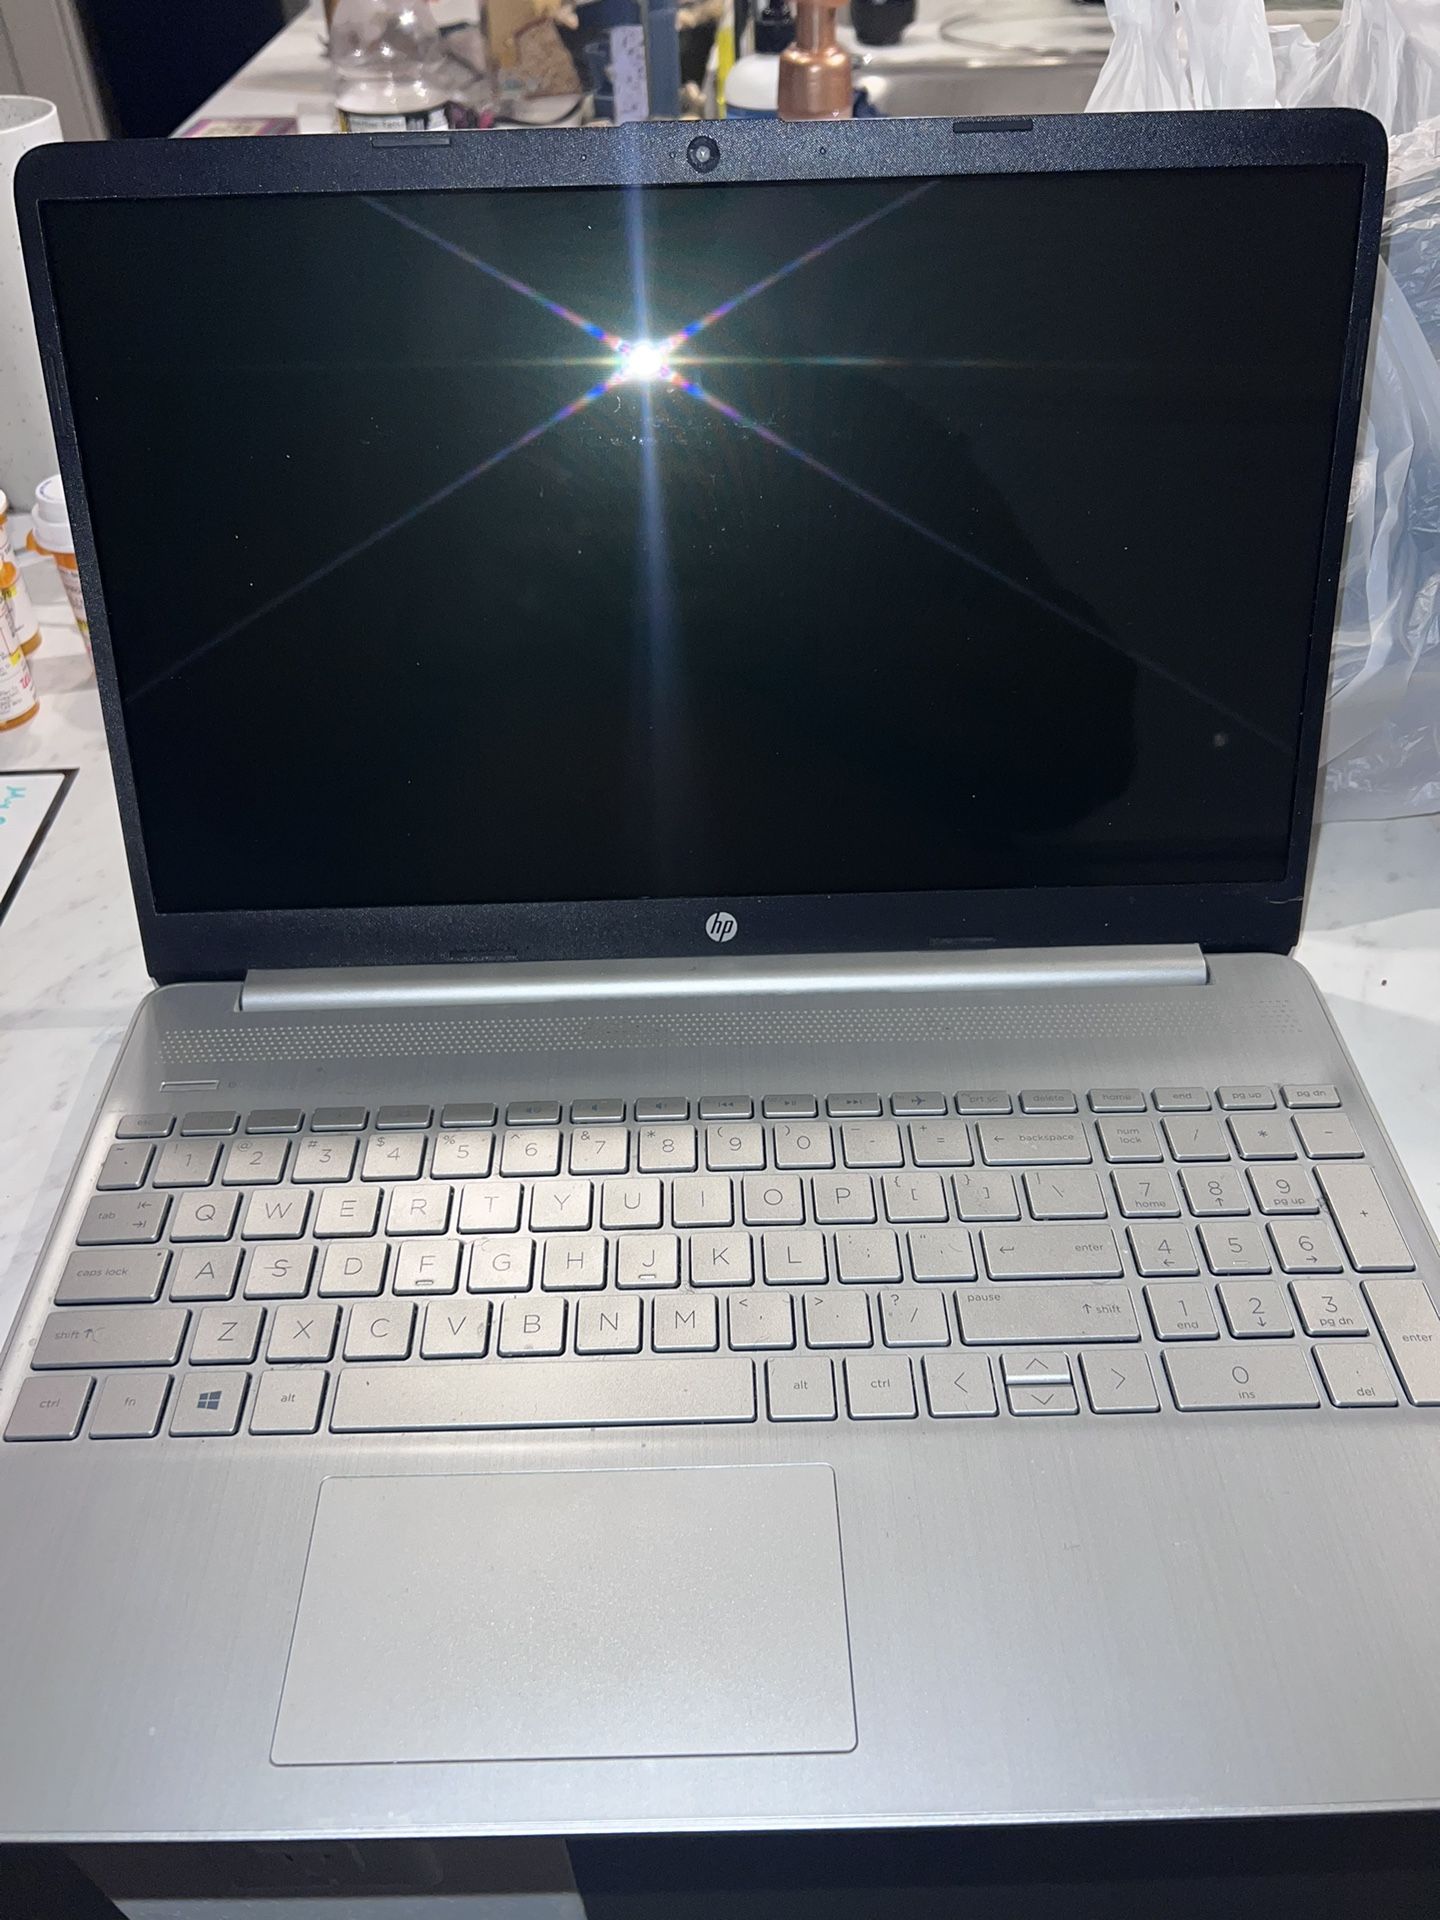 HP Touchscreen Intel i5 Laptop